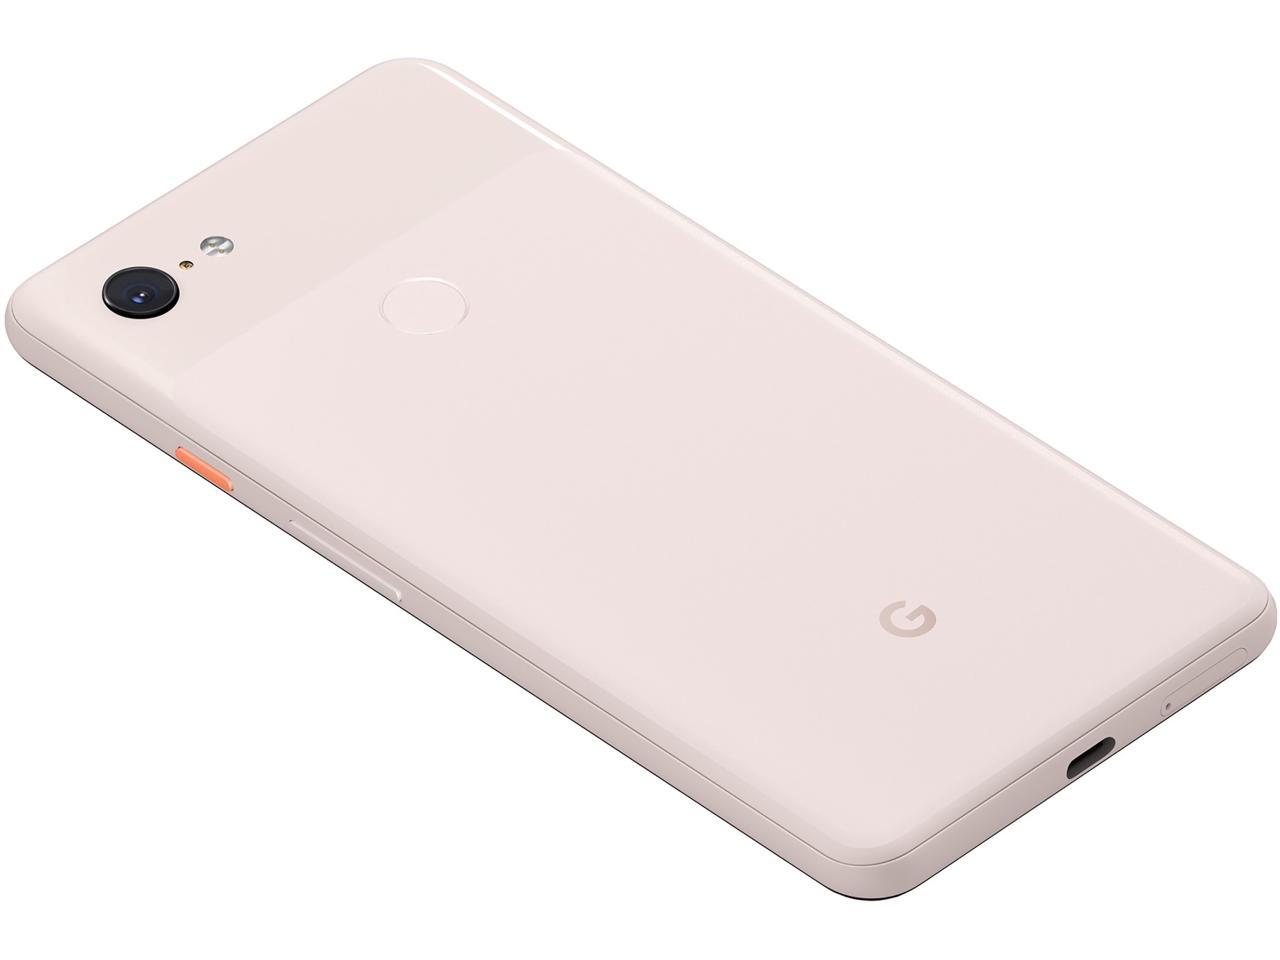 Google Pixel 3 XL 128GB Unlocked GSM & CDMA 4G LTE Android Phone w/ 12